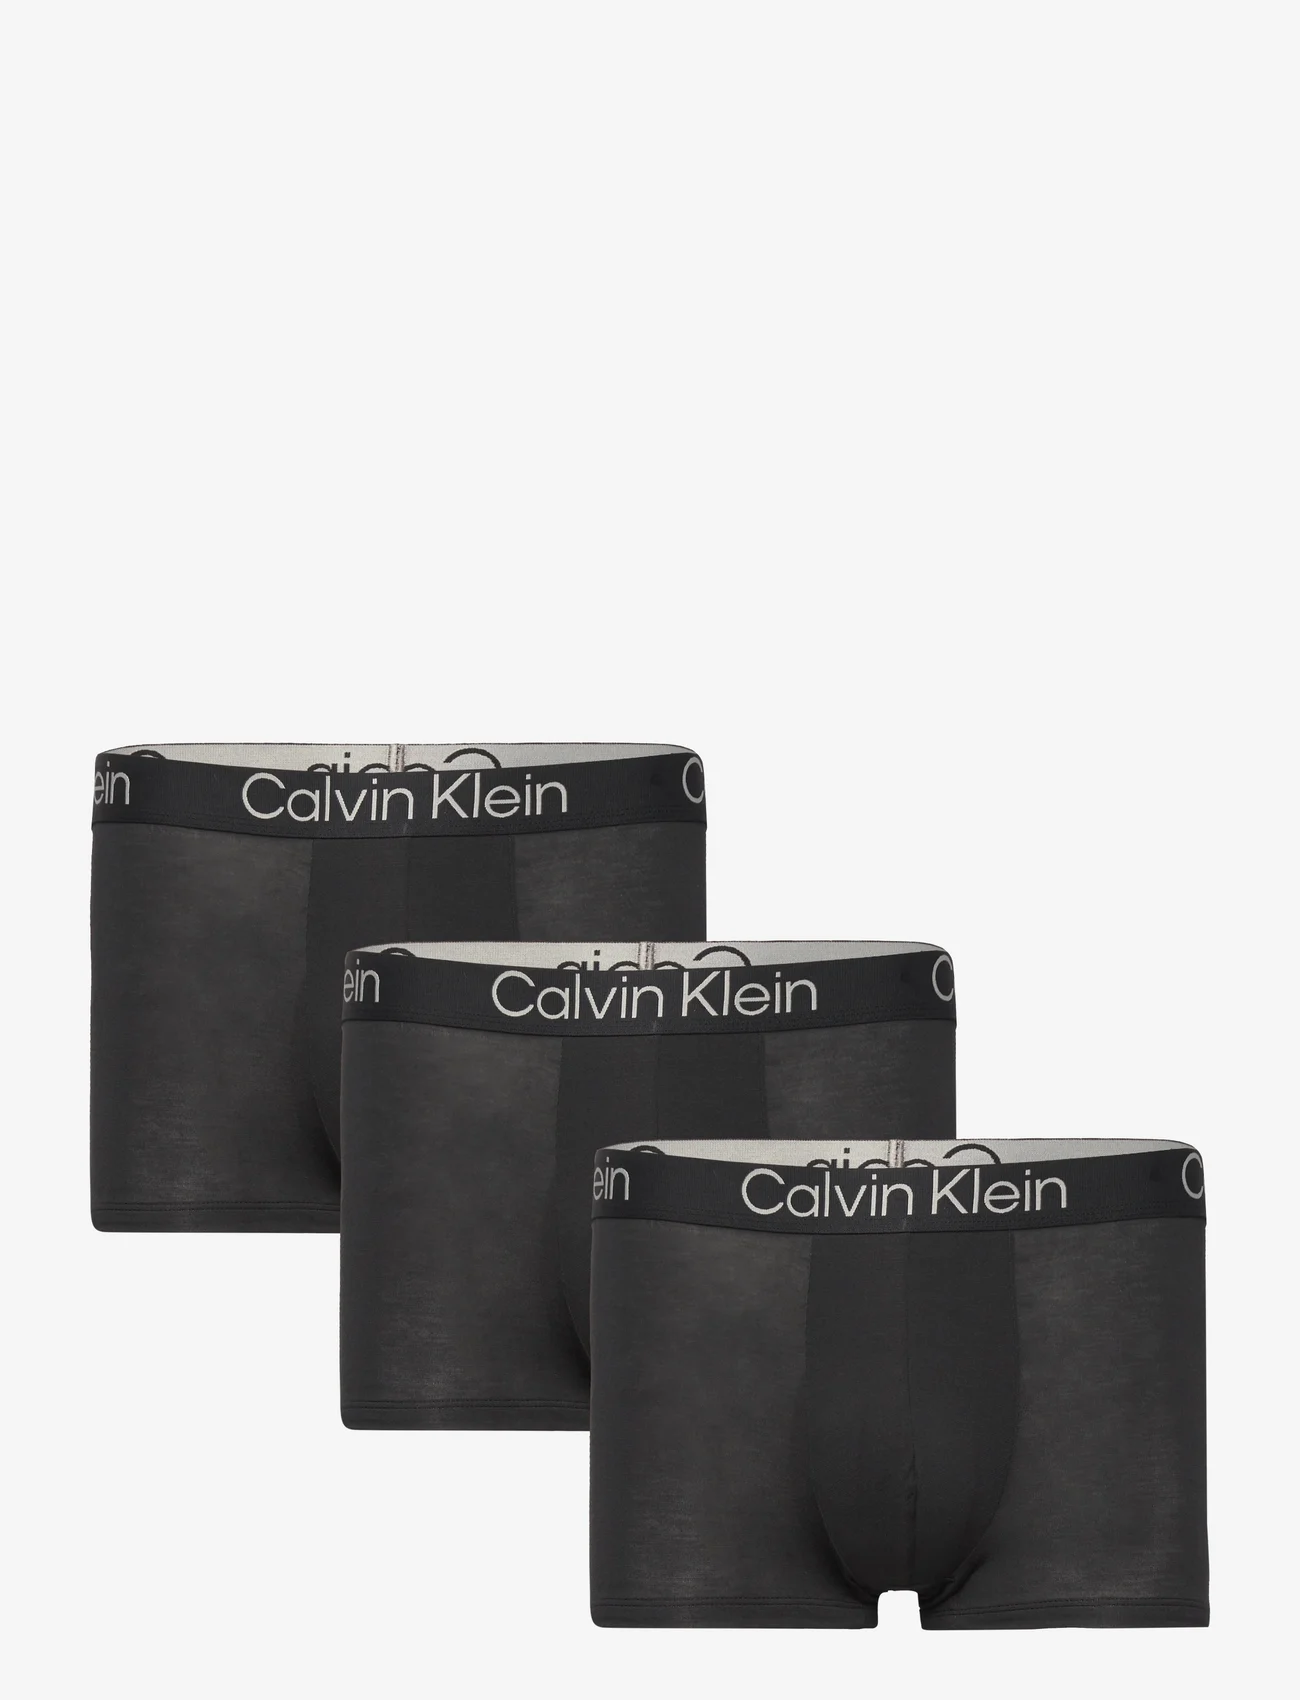 Calvin Klein - TRUNK 3PK - boxershorts - black, black, black - 0